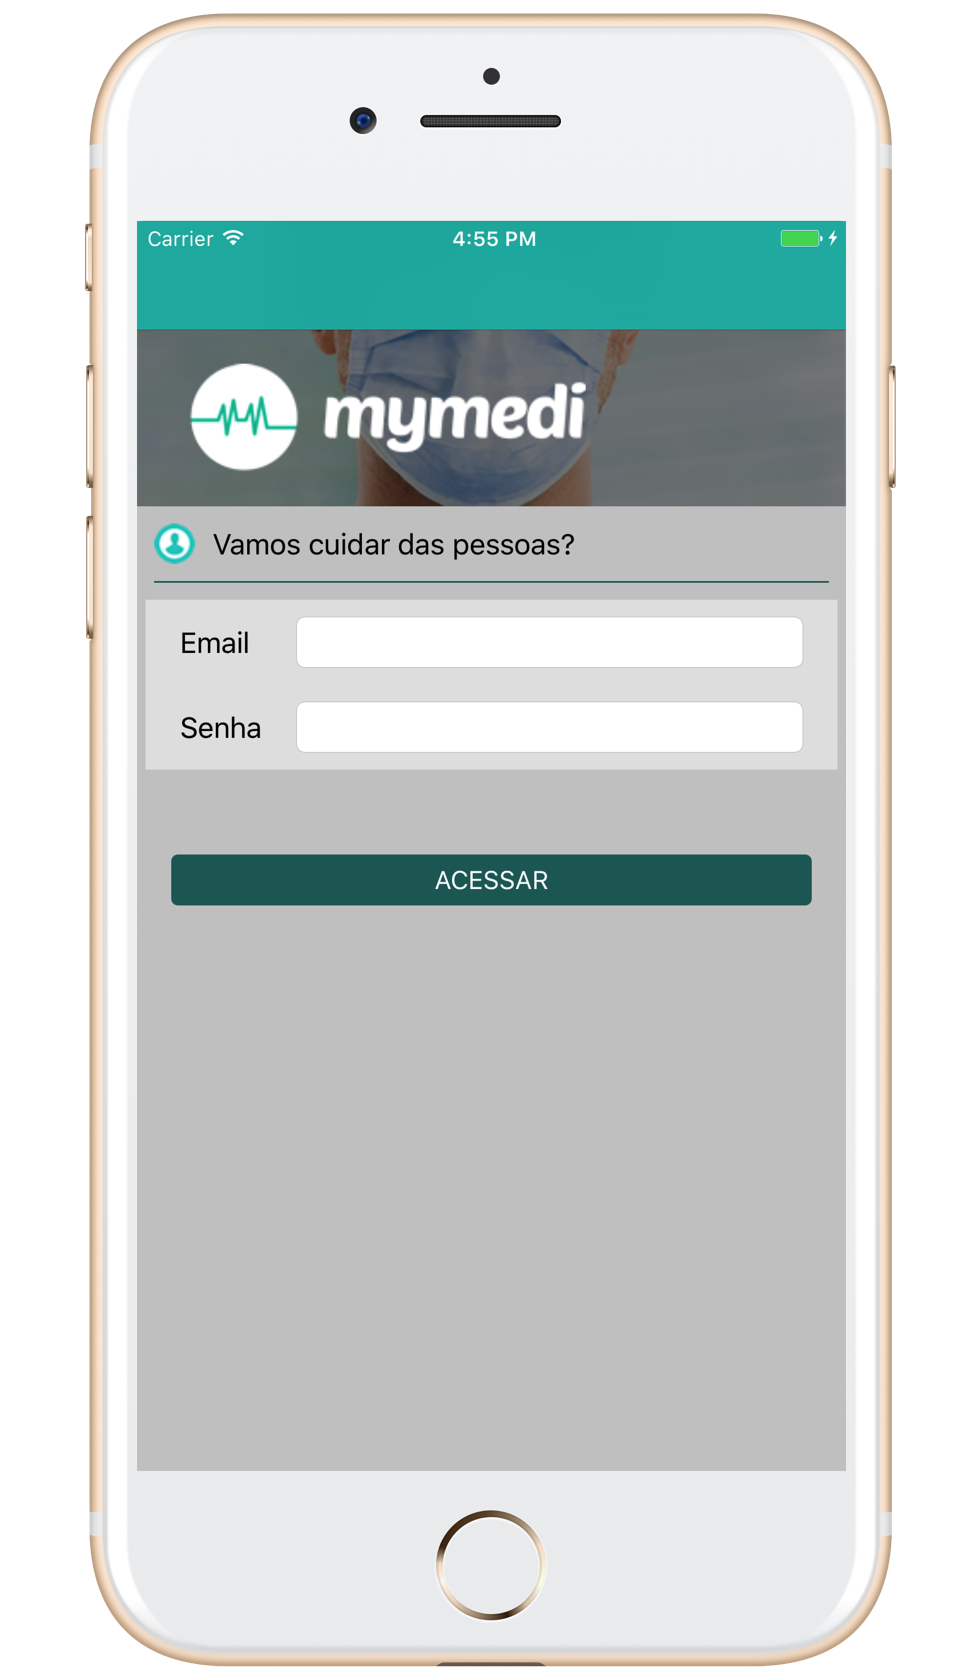 iOS version of the MyMedi app